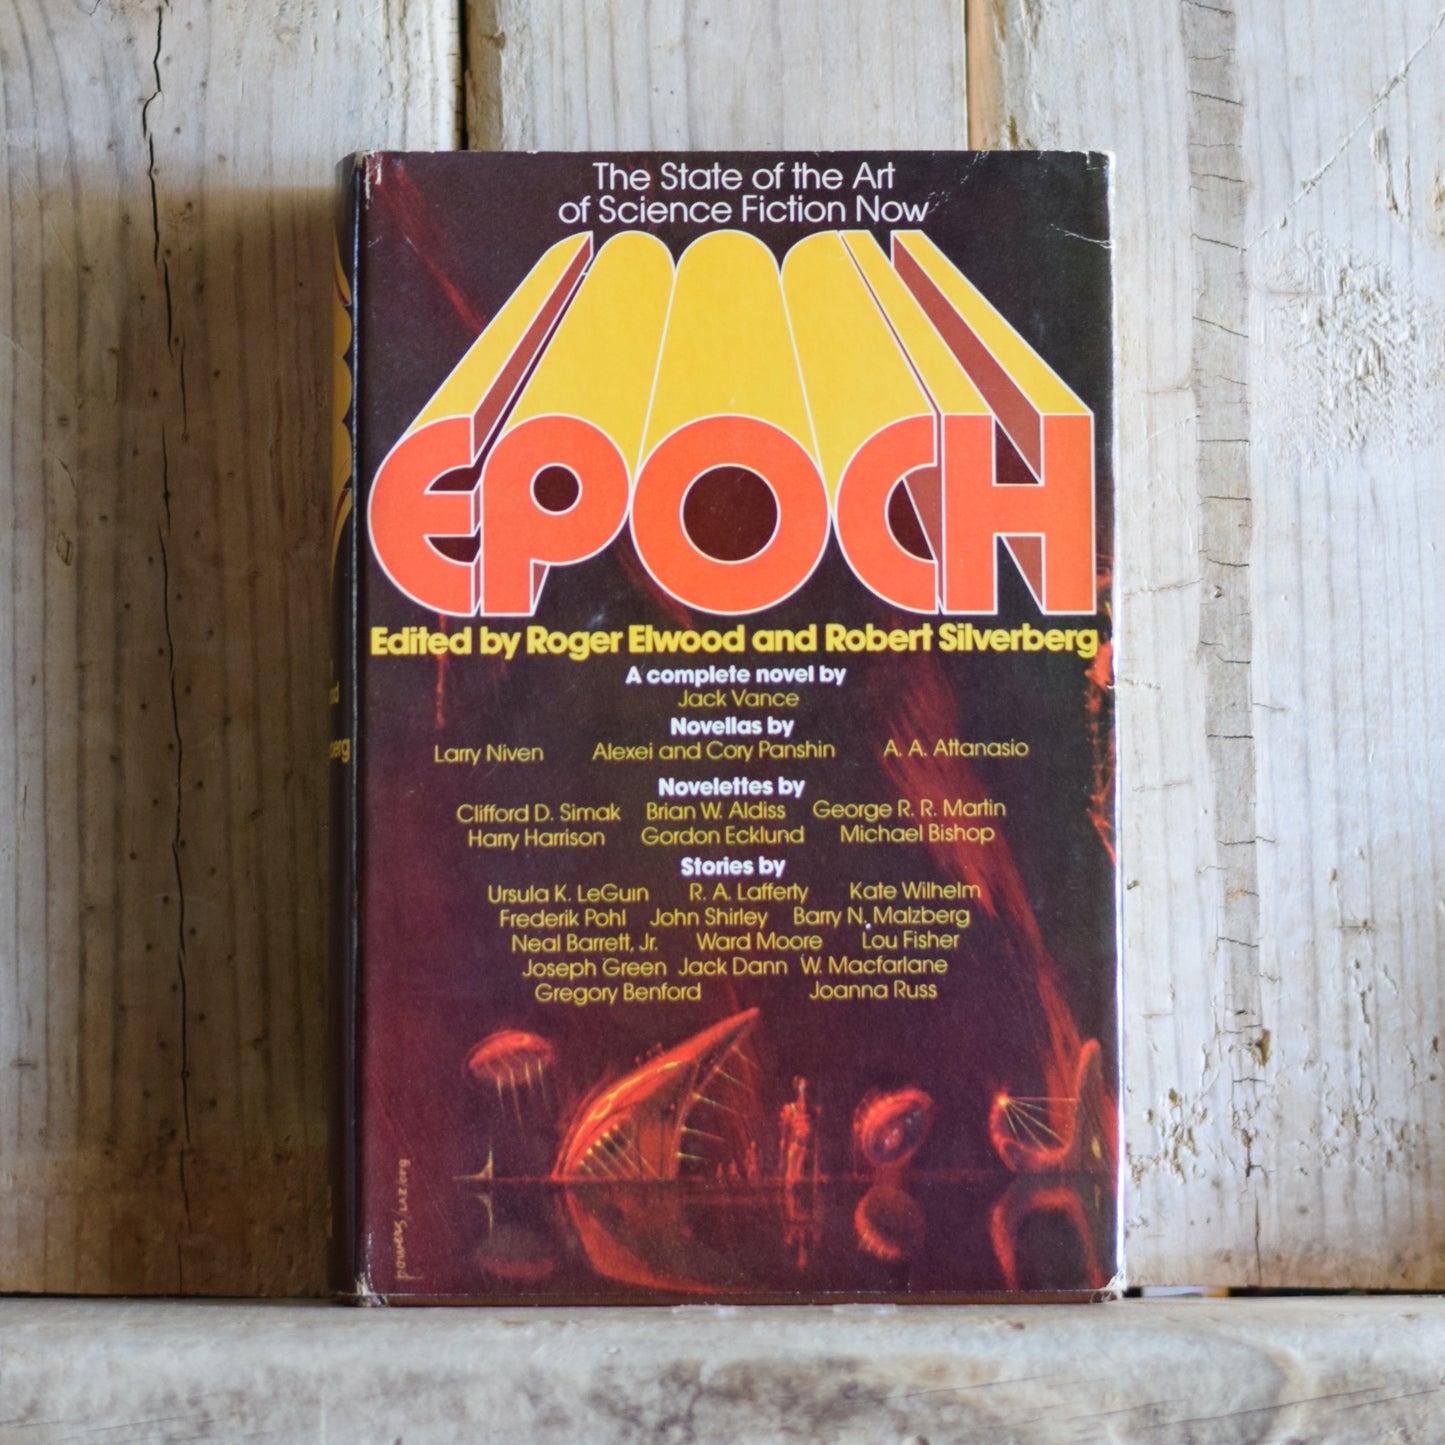 Vintage Sci-fi Hardback: Epoch, Edited by Roger Elwood and Robert Silverberg BCE